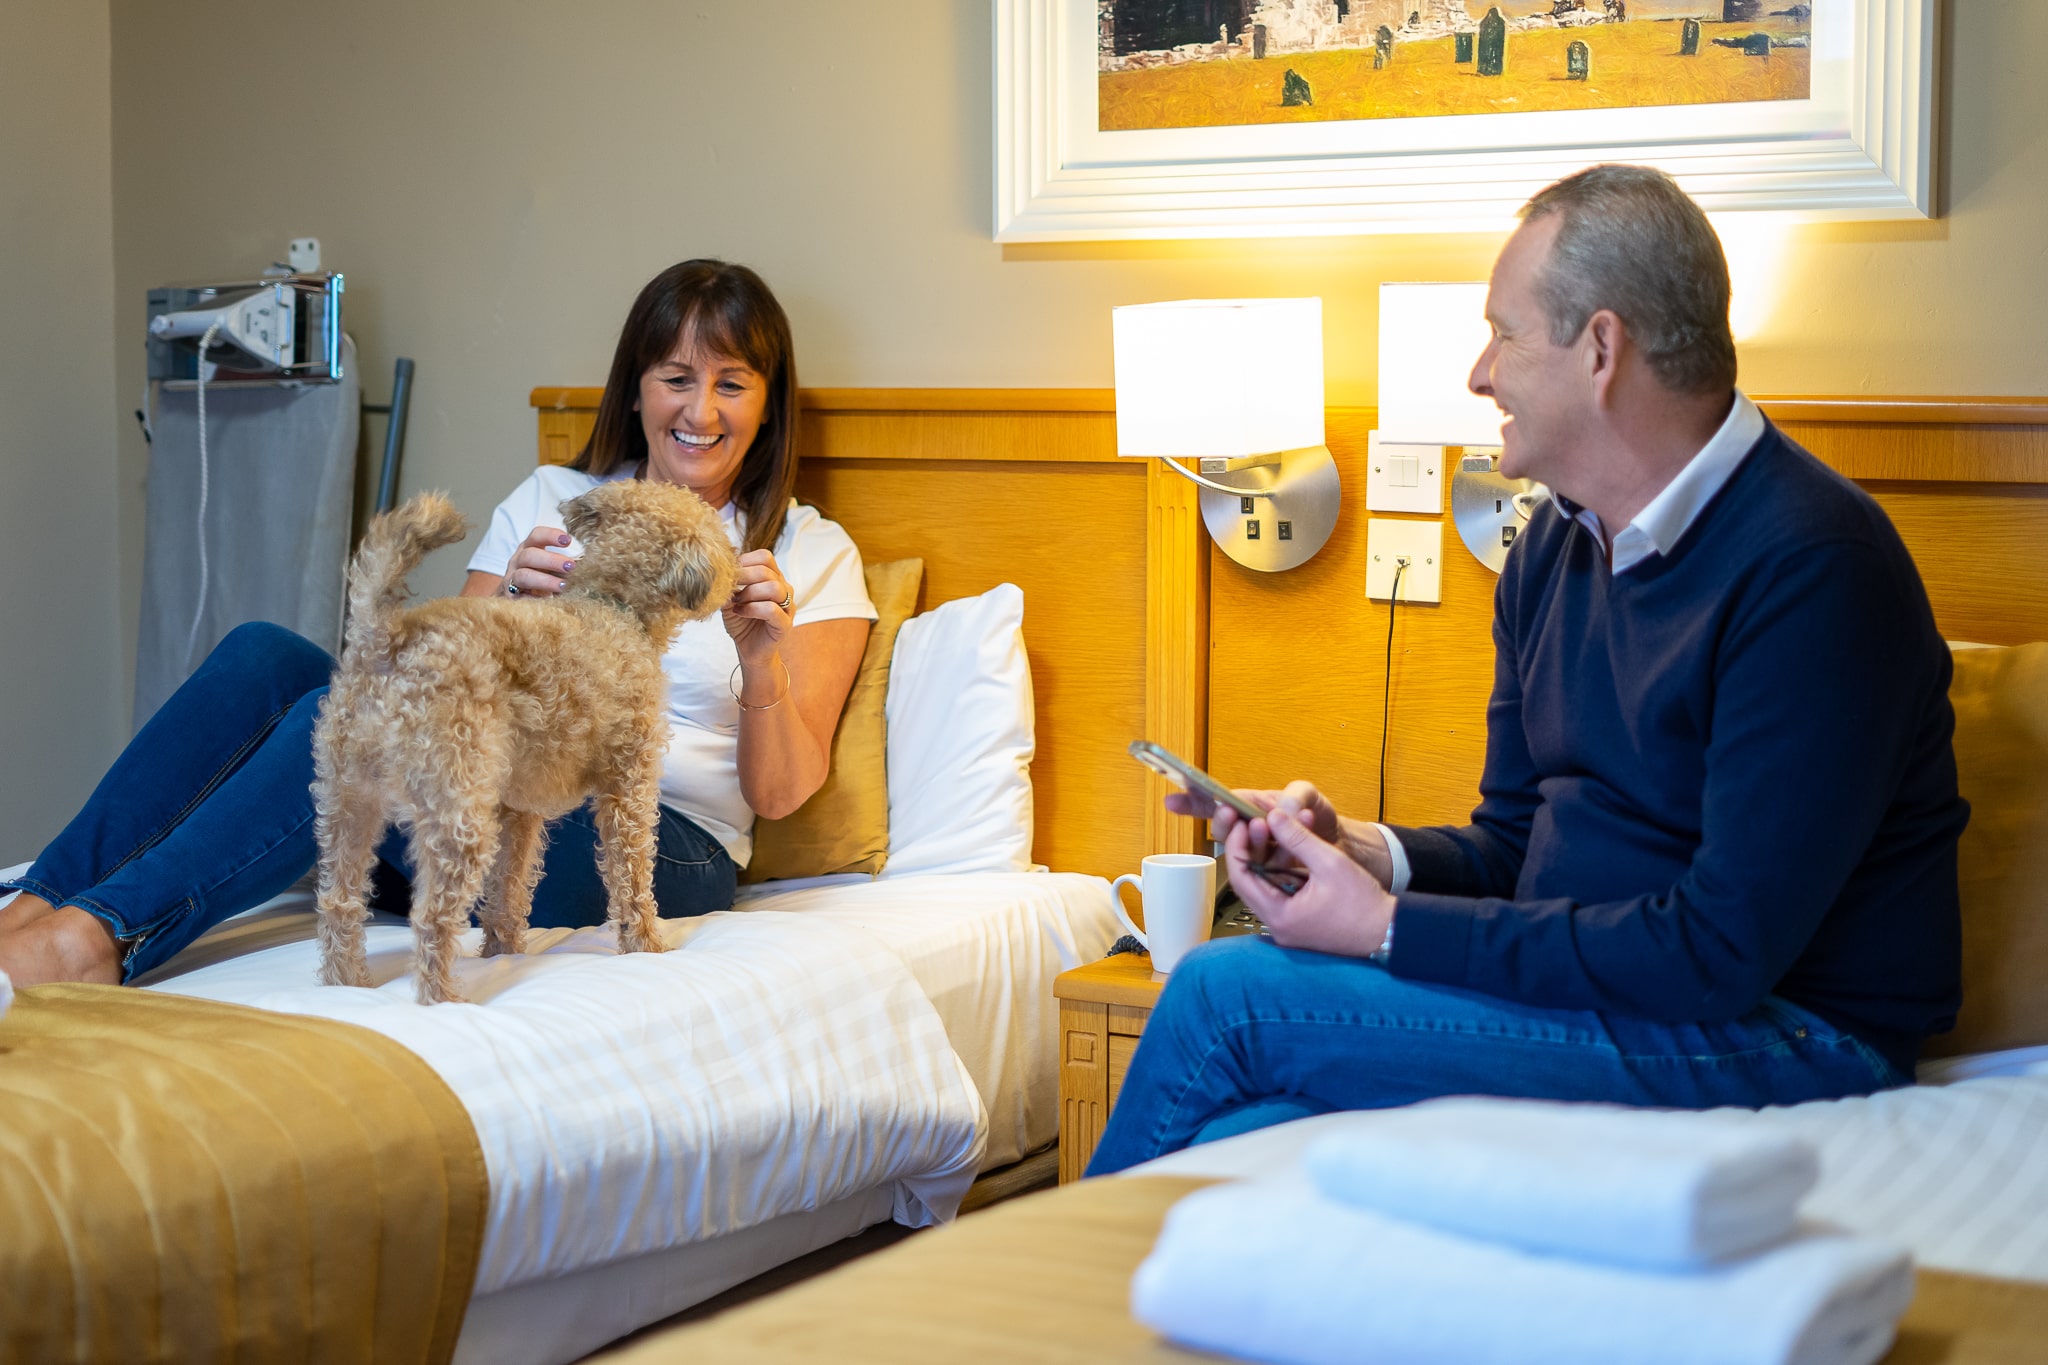 Pet Friendly accommodation, Standard Rooms with mini kitchen or tea & coffee. Alternative to Enniskillen Hotels.